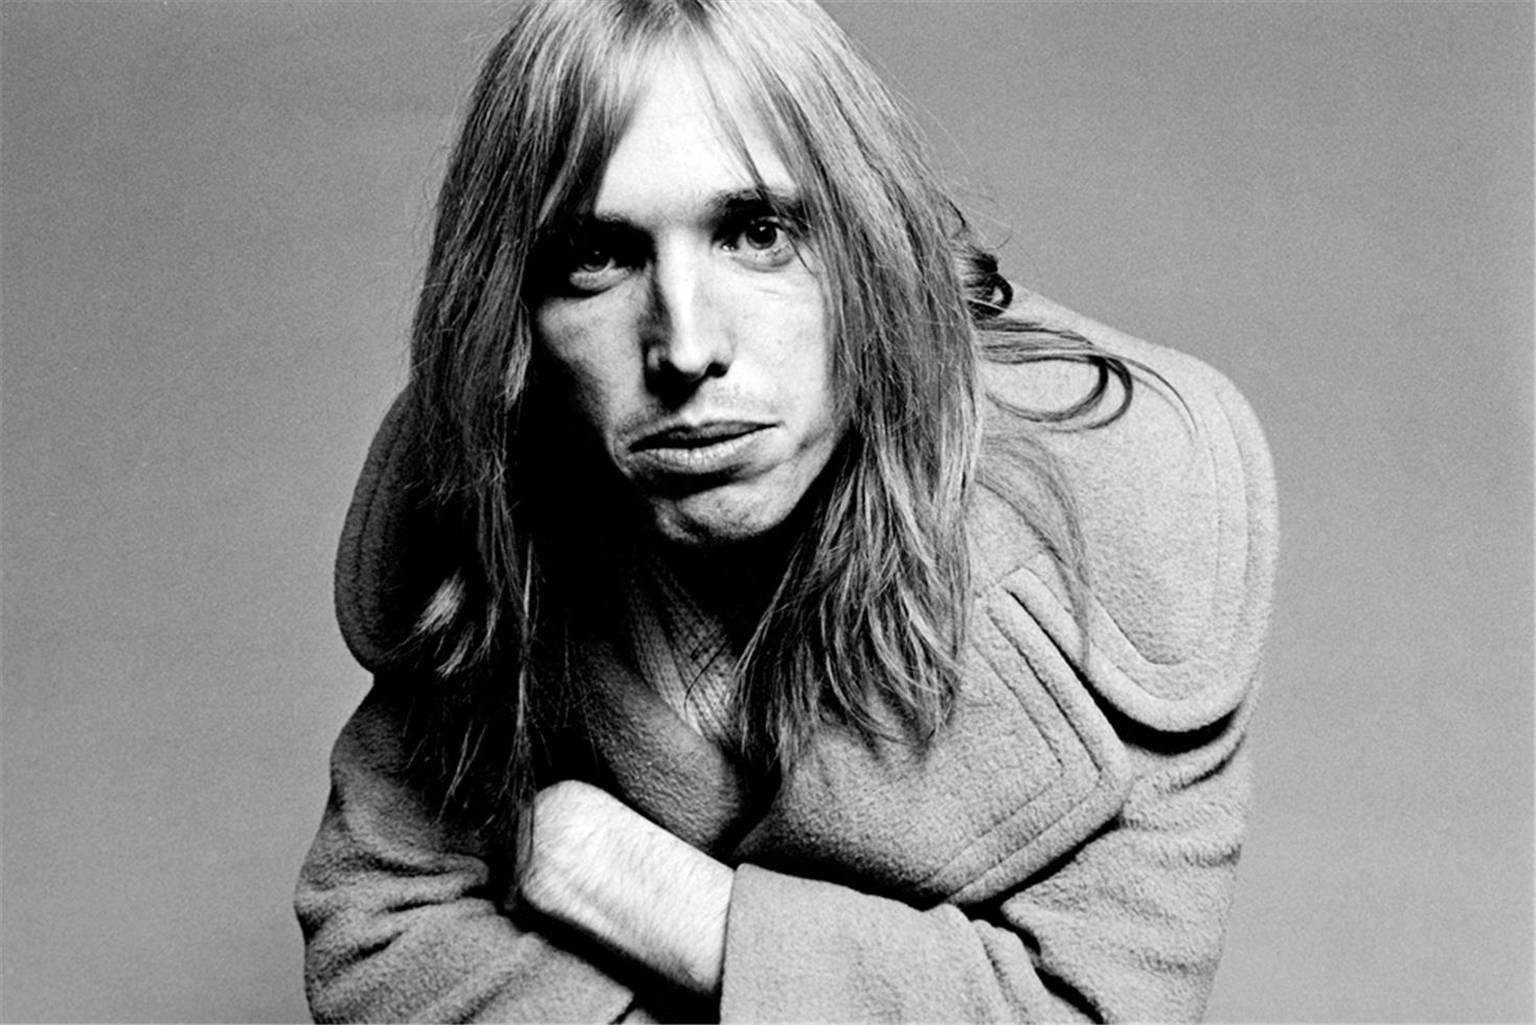 Richard E. Aaron Portrait Photograph – Tom Petty, 1973